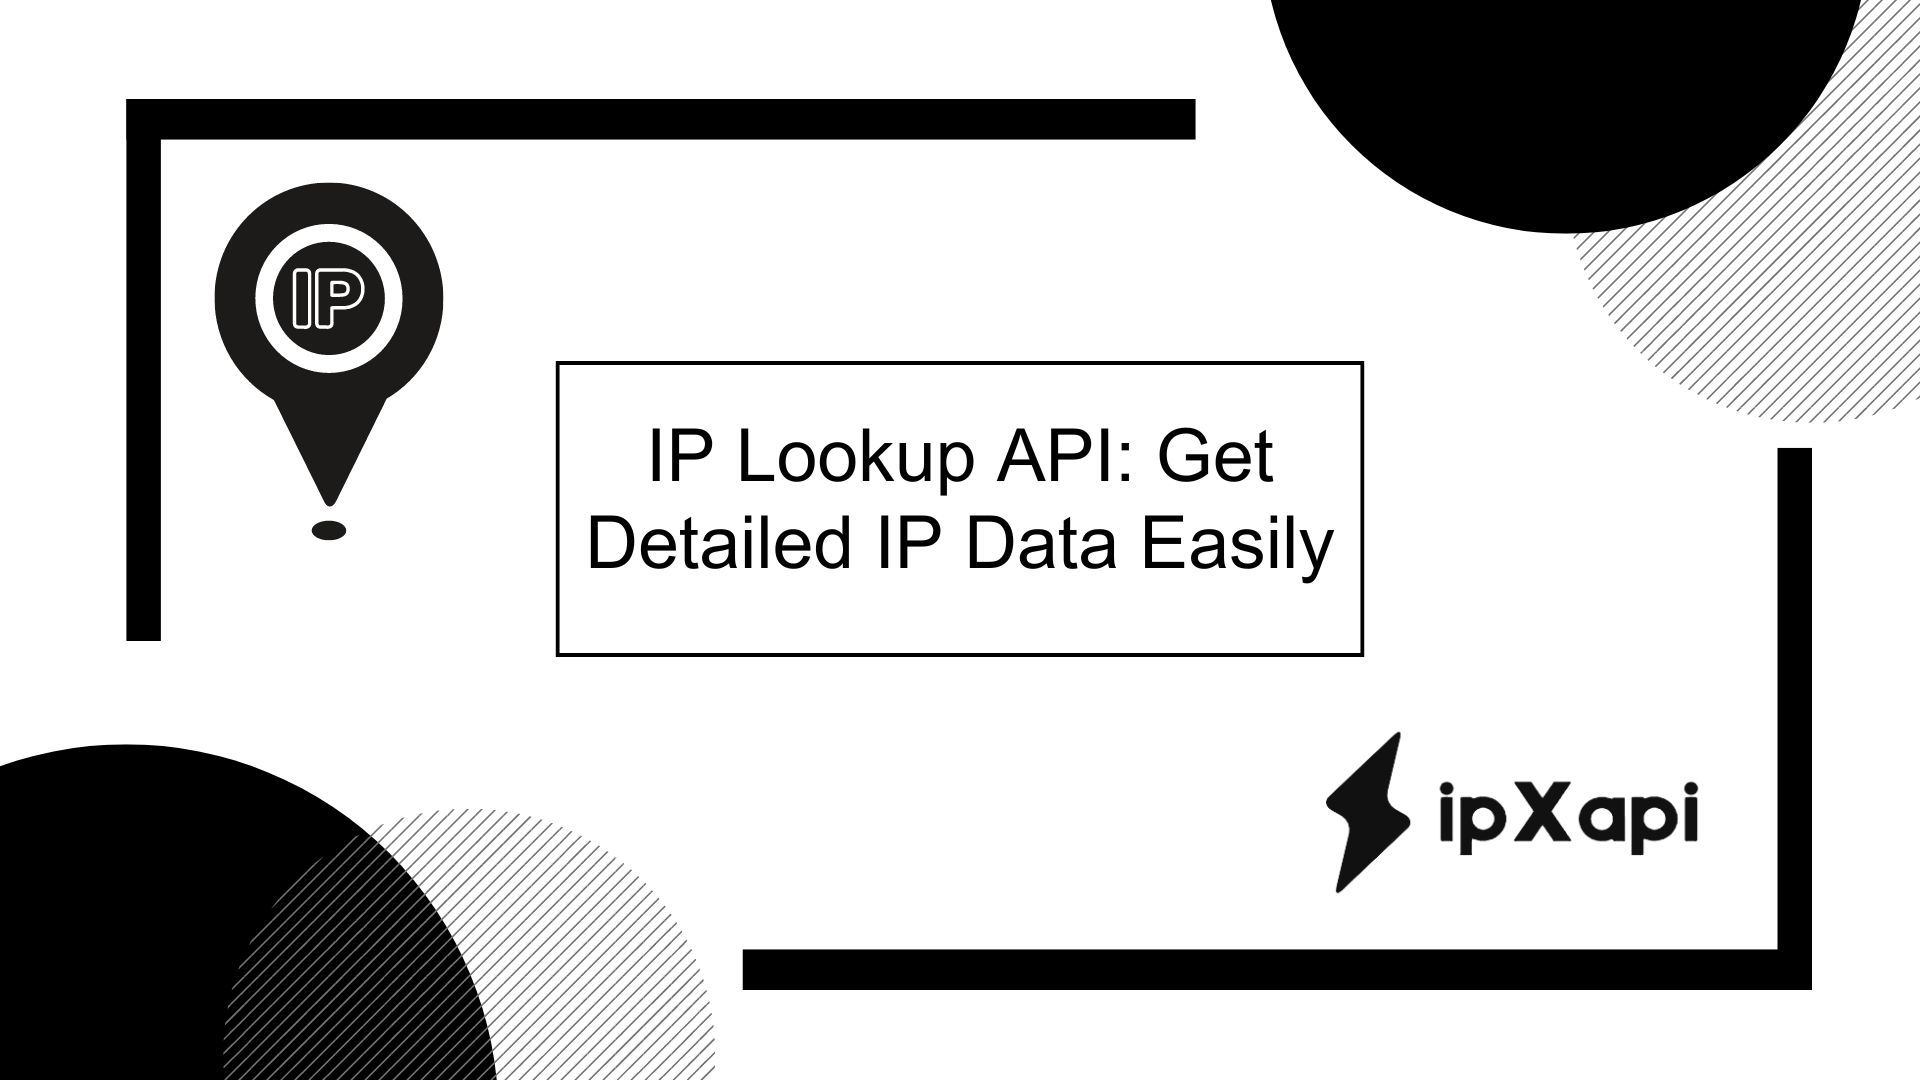 IP Lookup API: Get Detailed IP Data Easily